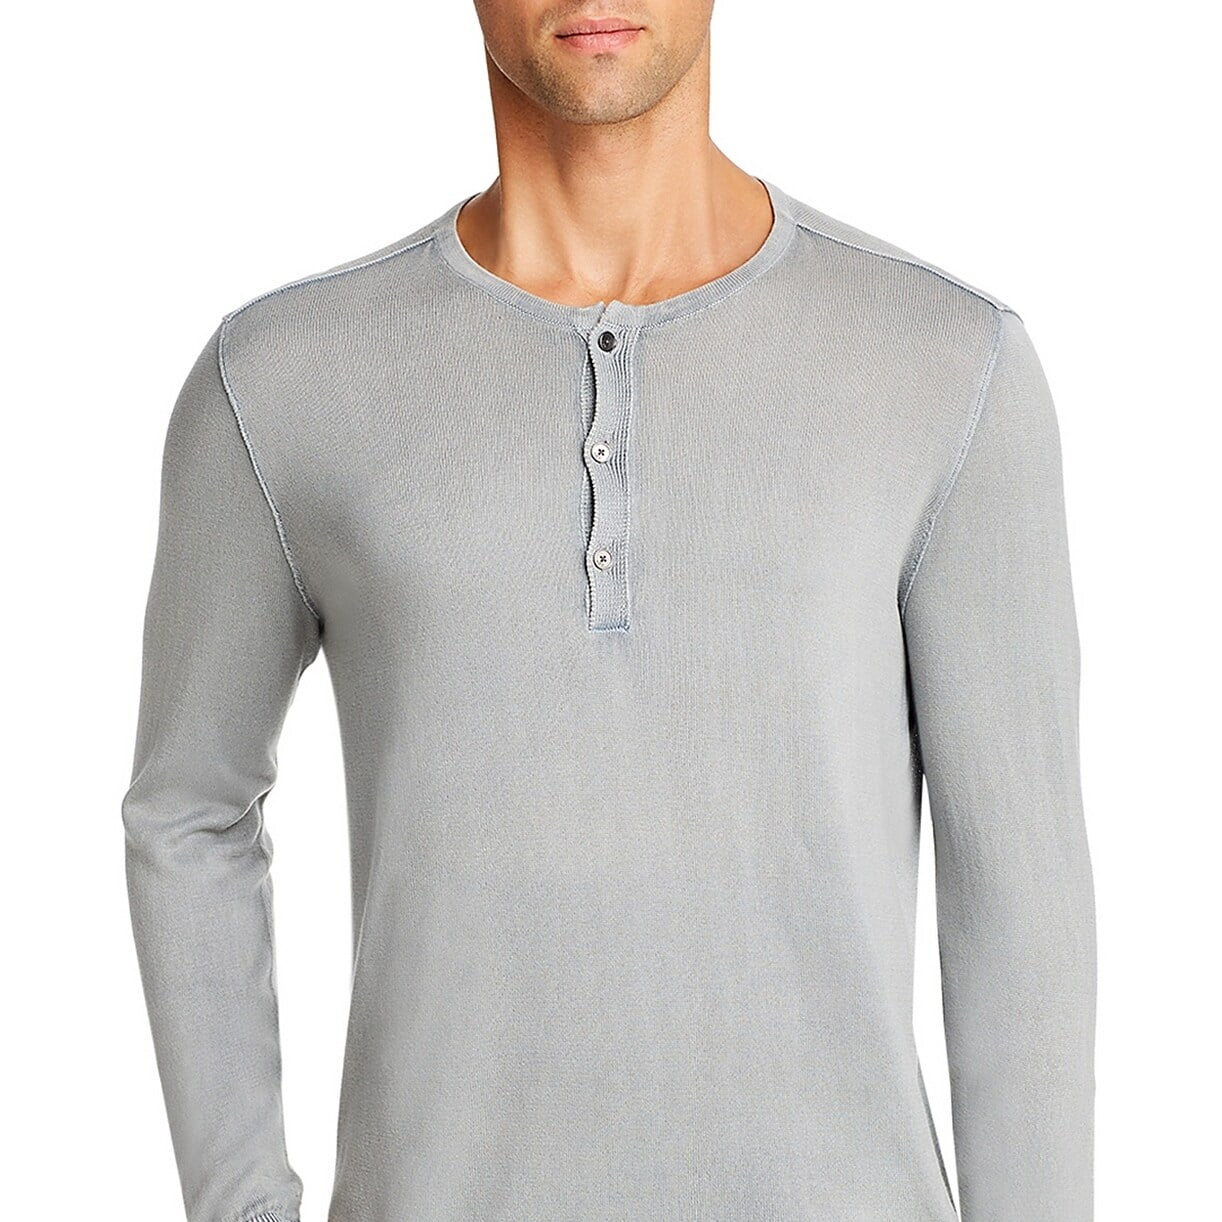 Vedhæftet fil skolde løn John Varvatos REFLECTION Long-Sleeve Henley Shirt, US Small - Walmart.com